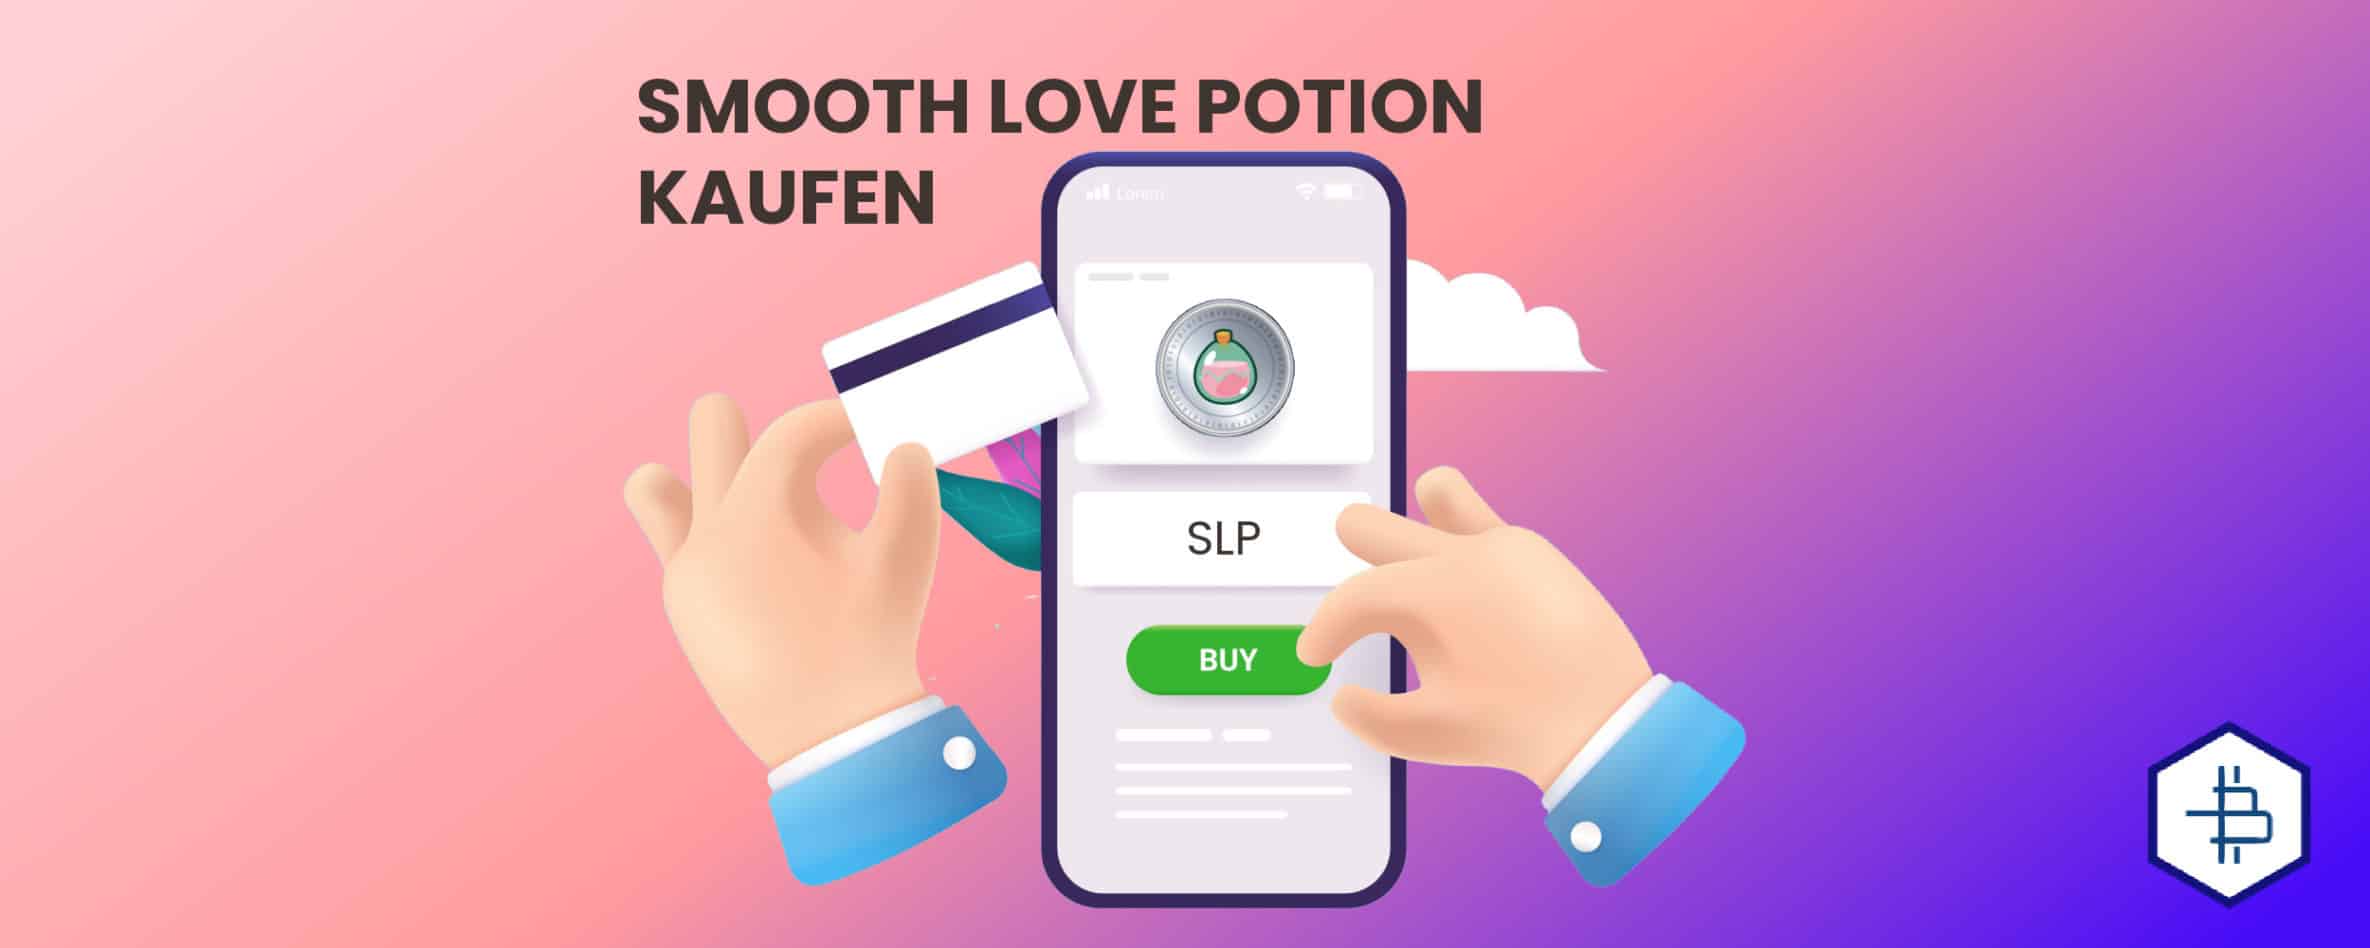 Smooth Love Potion kaufen